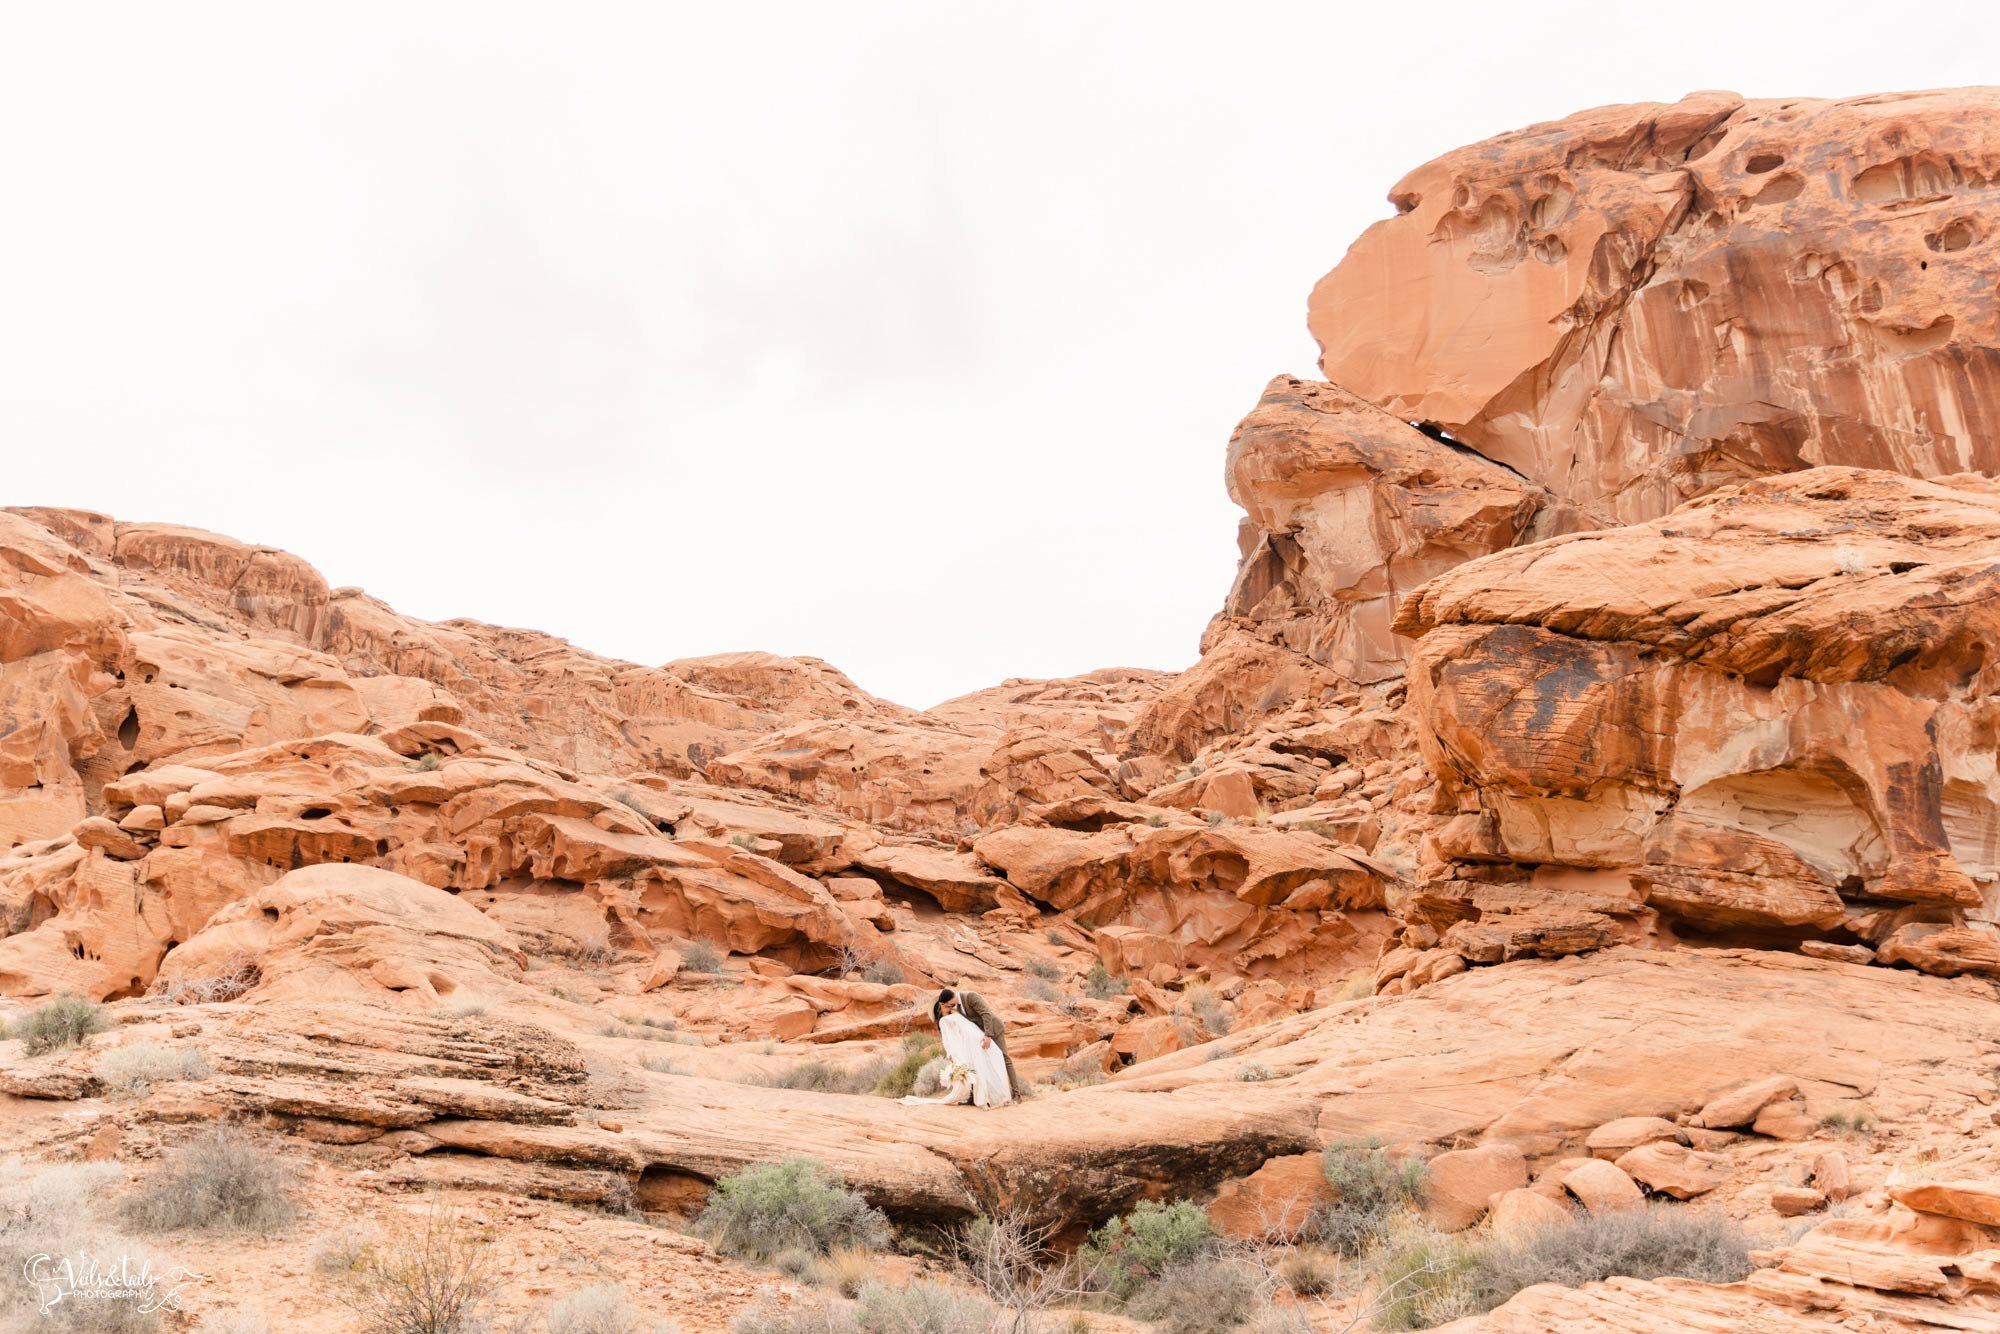 boho wedding style, desert boots, adventure elopement photography Valley of Fire, Nevada